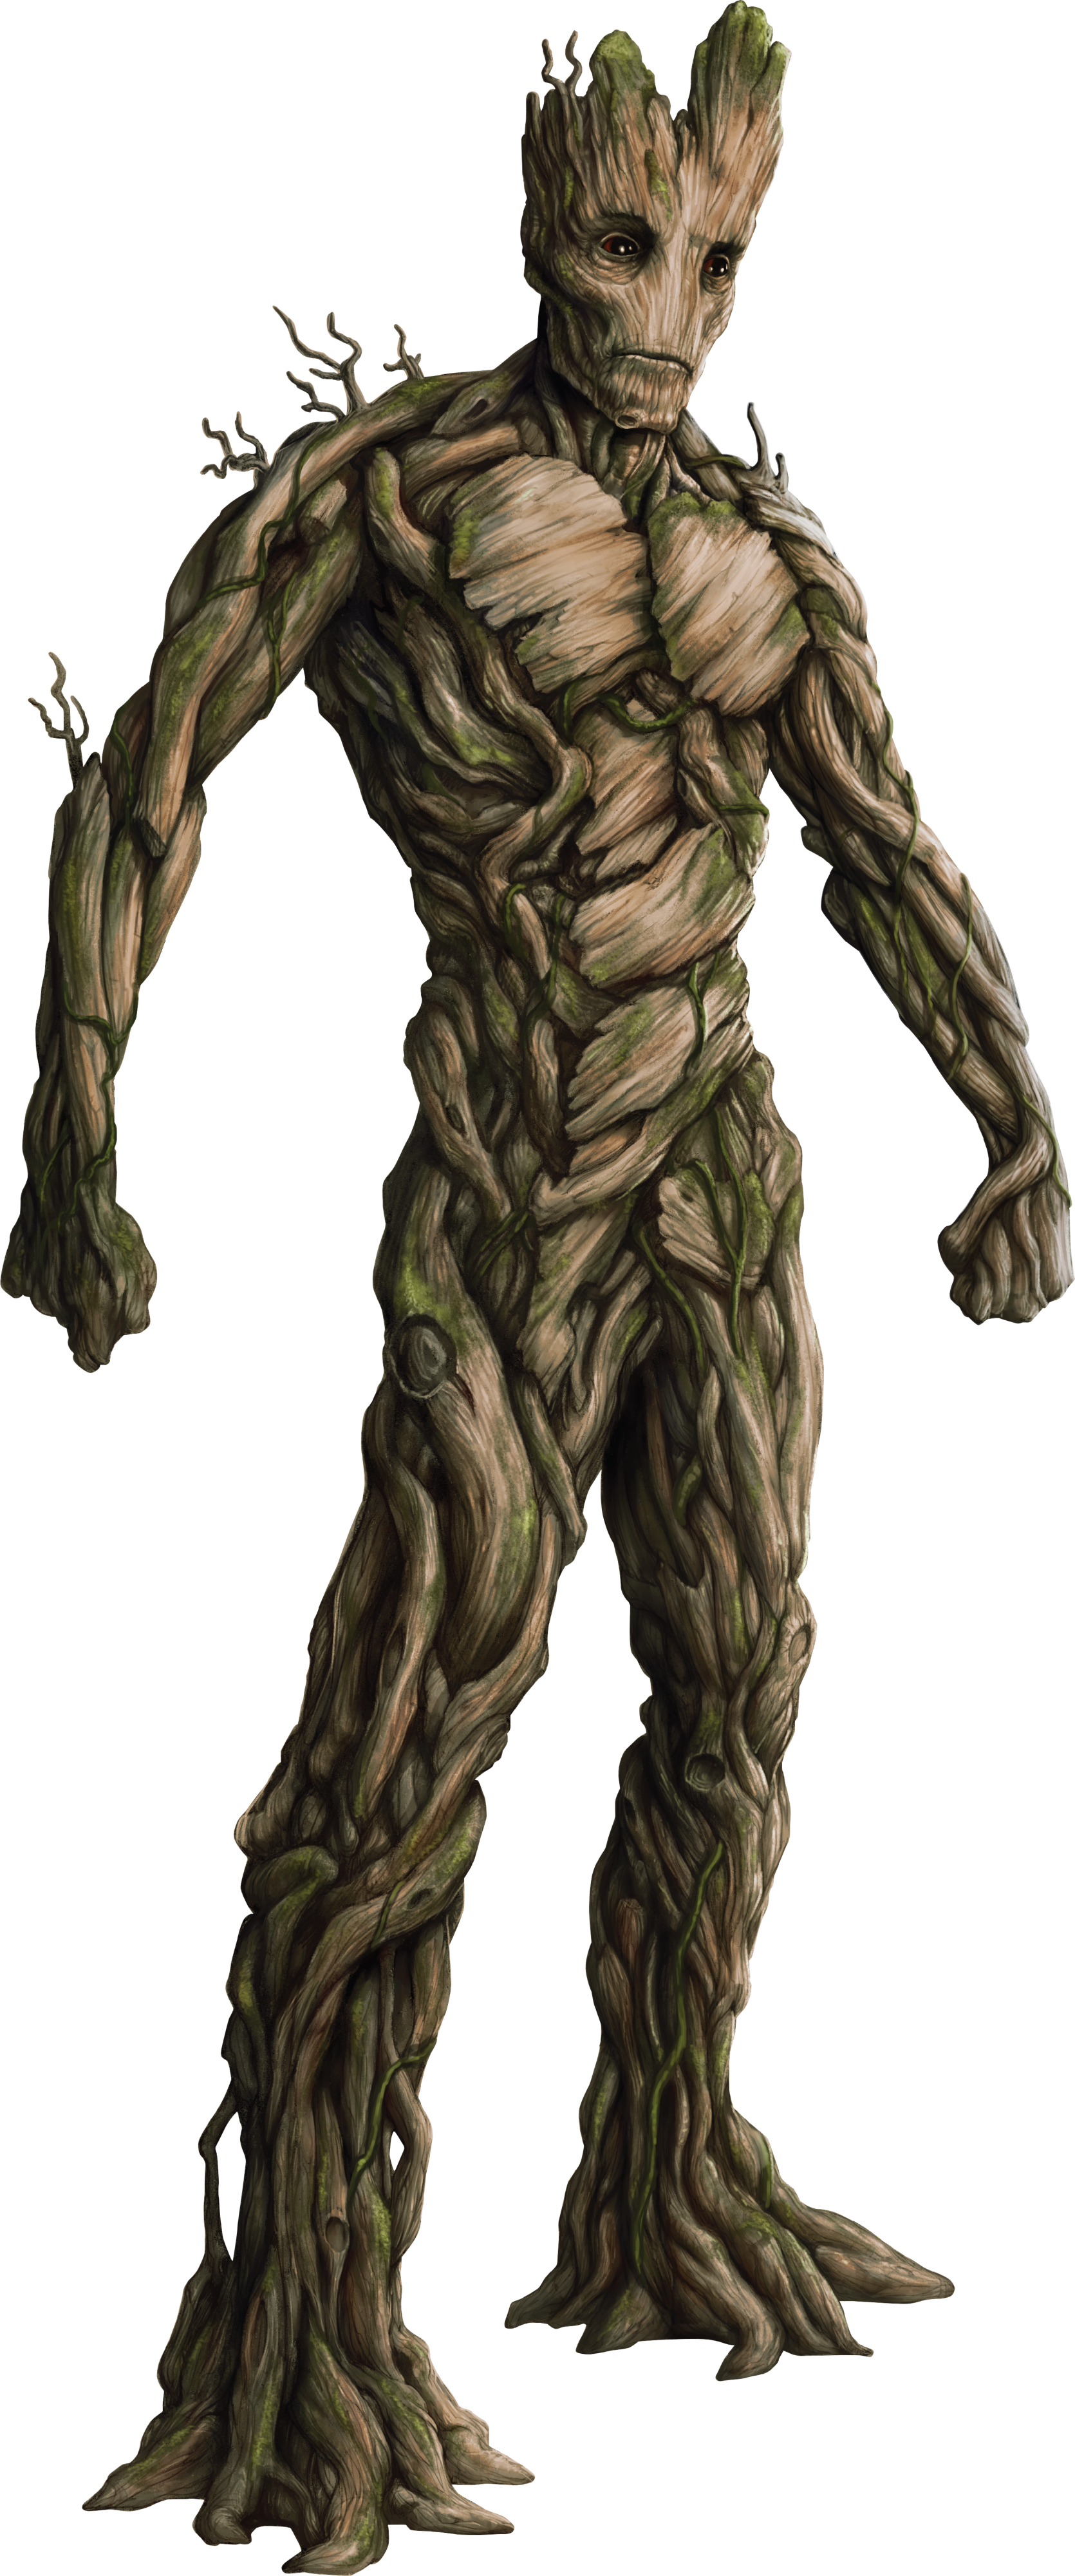 Groot, Character Profile Wikia